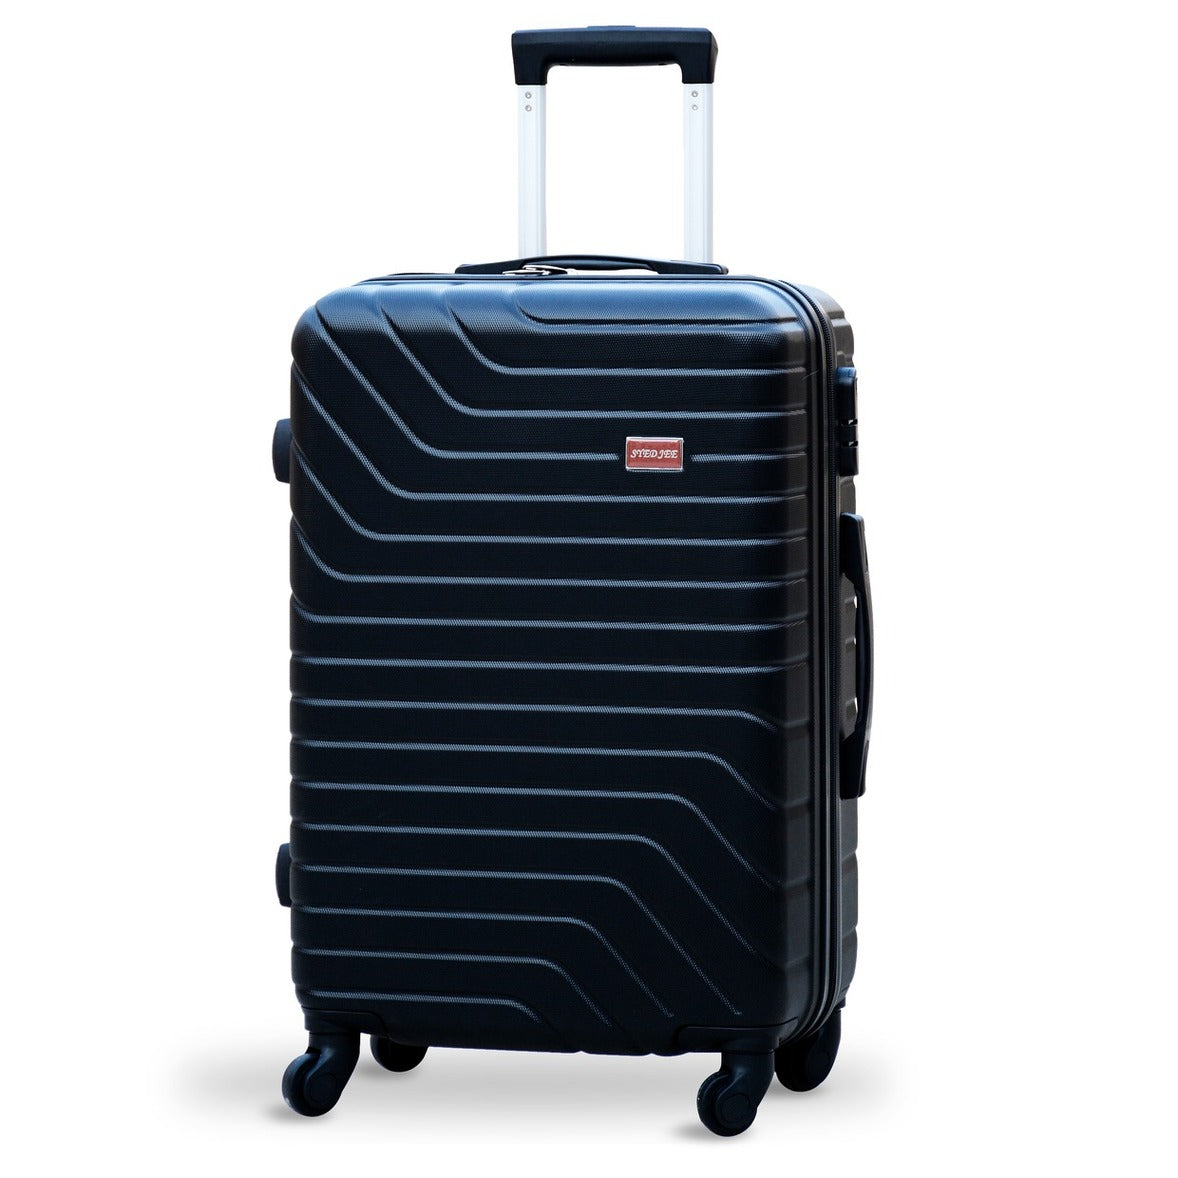 28" Black Colour SJ ABS Luggage Lightweight Hard Case Trolley Bag | 2 Year Warranty